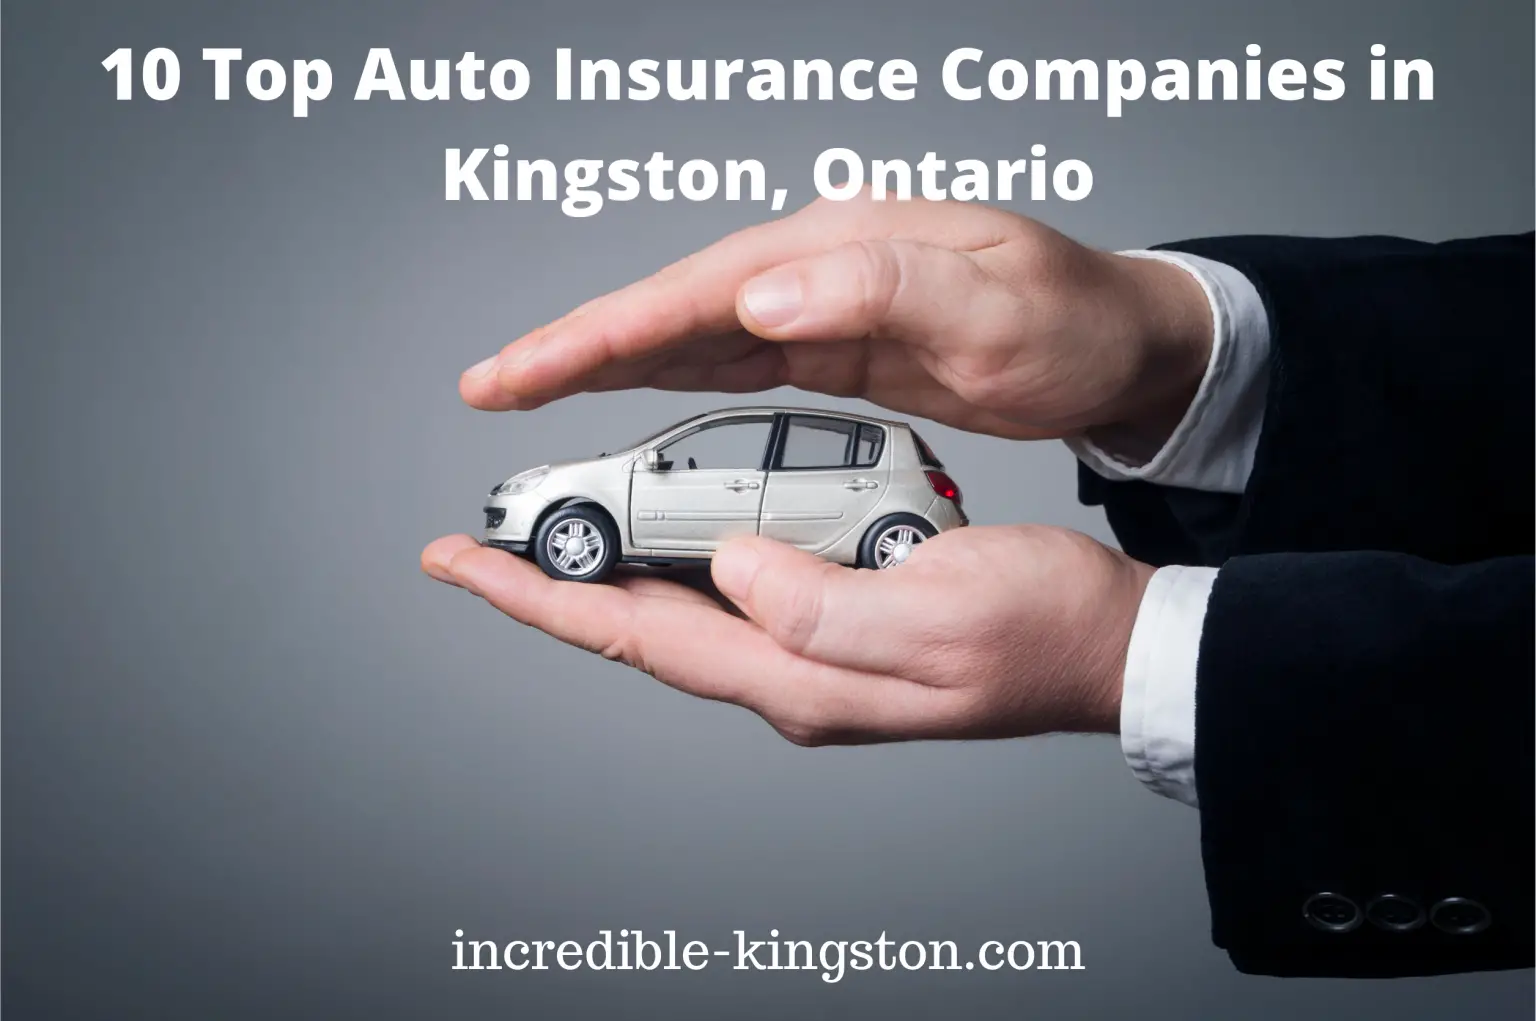 10 Top Auto Insurance Companies in Kingston, Ontario